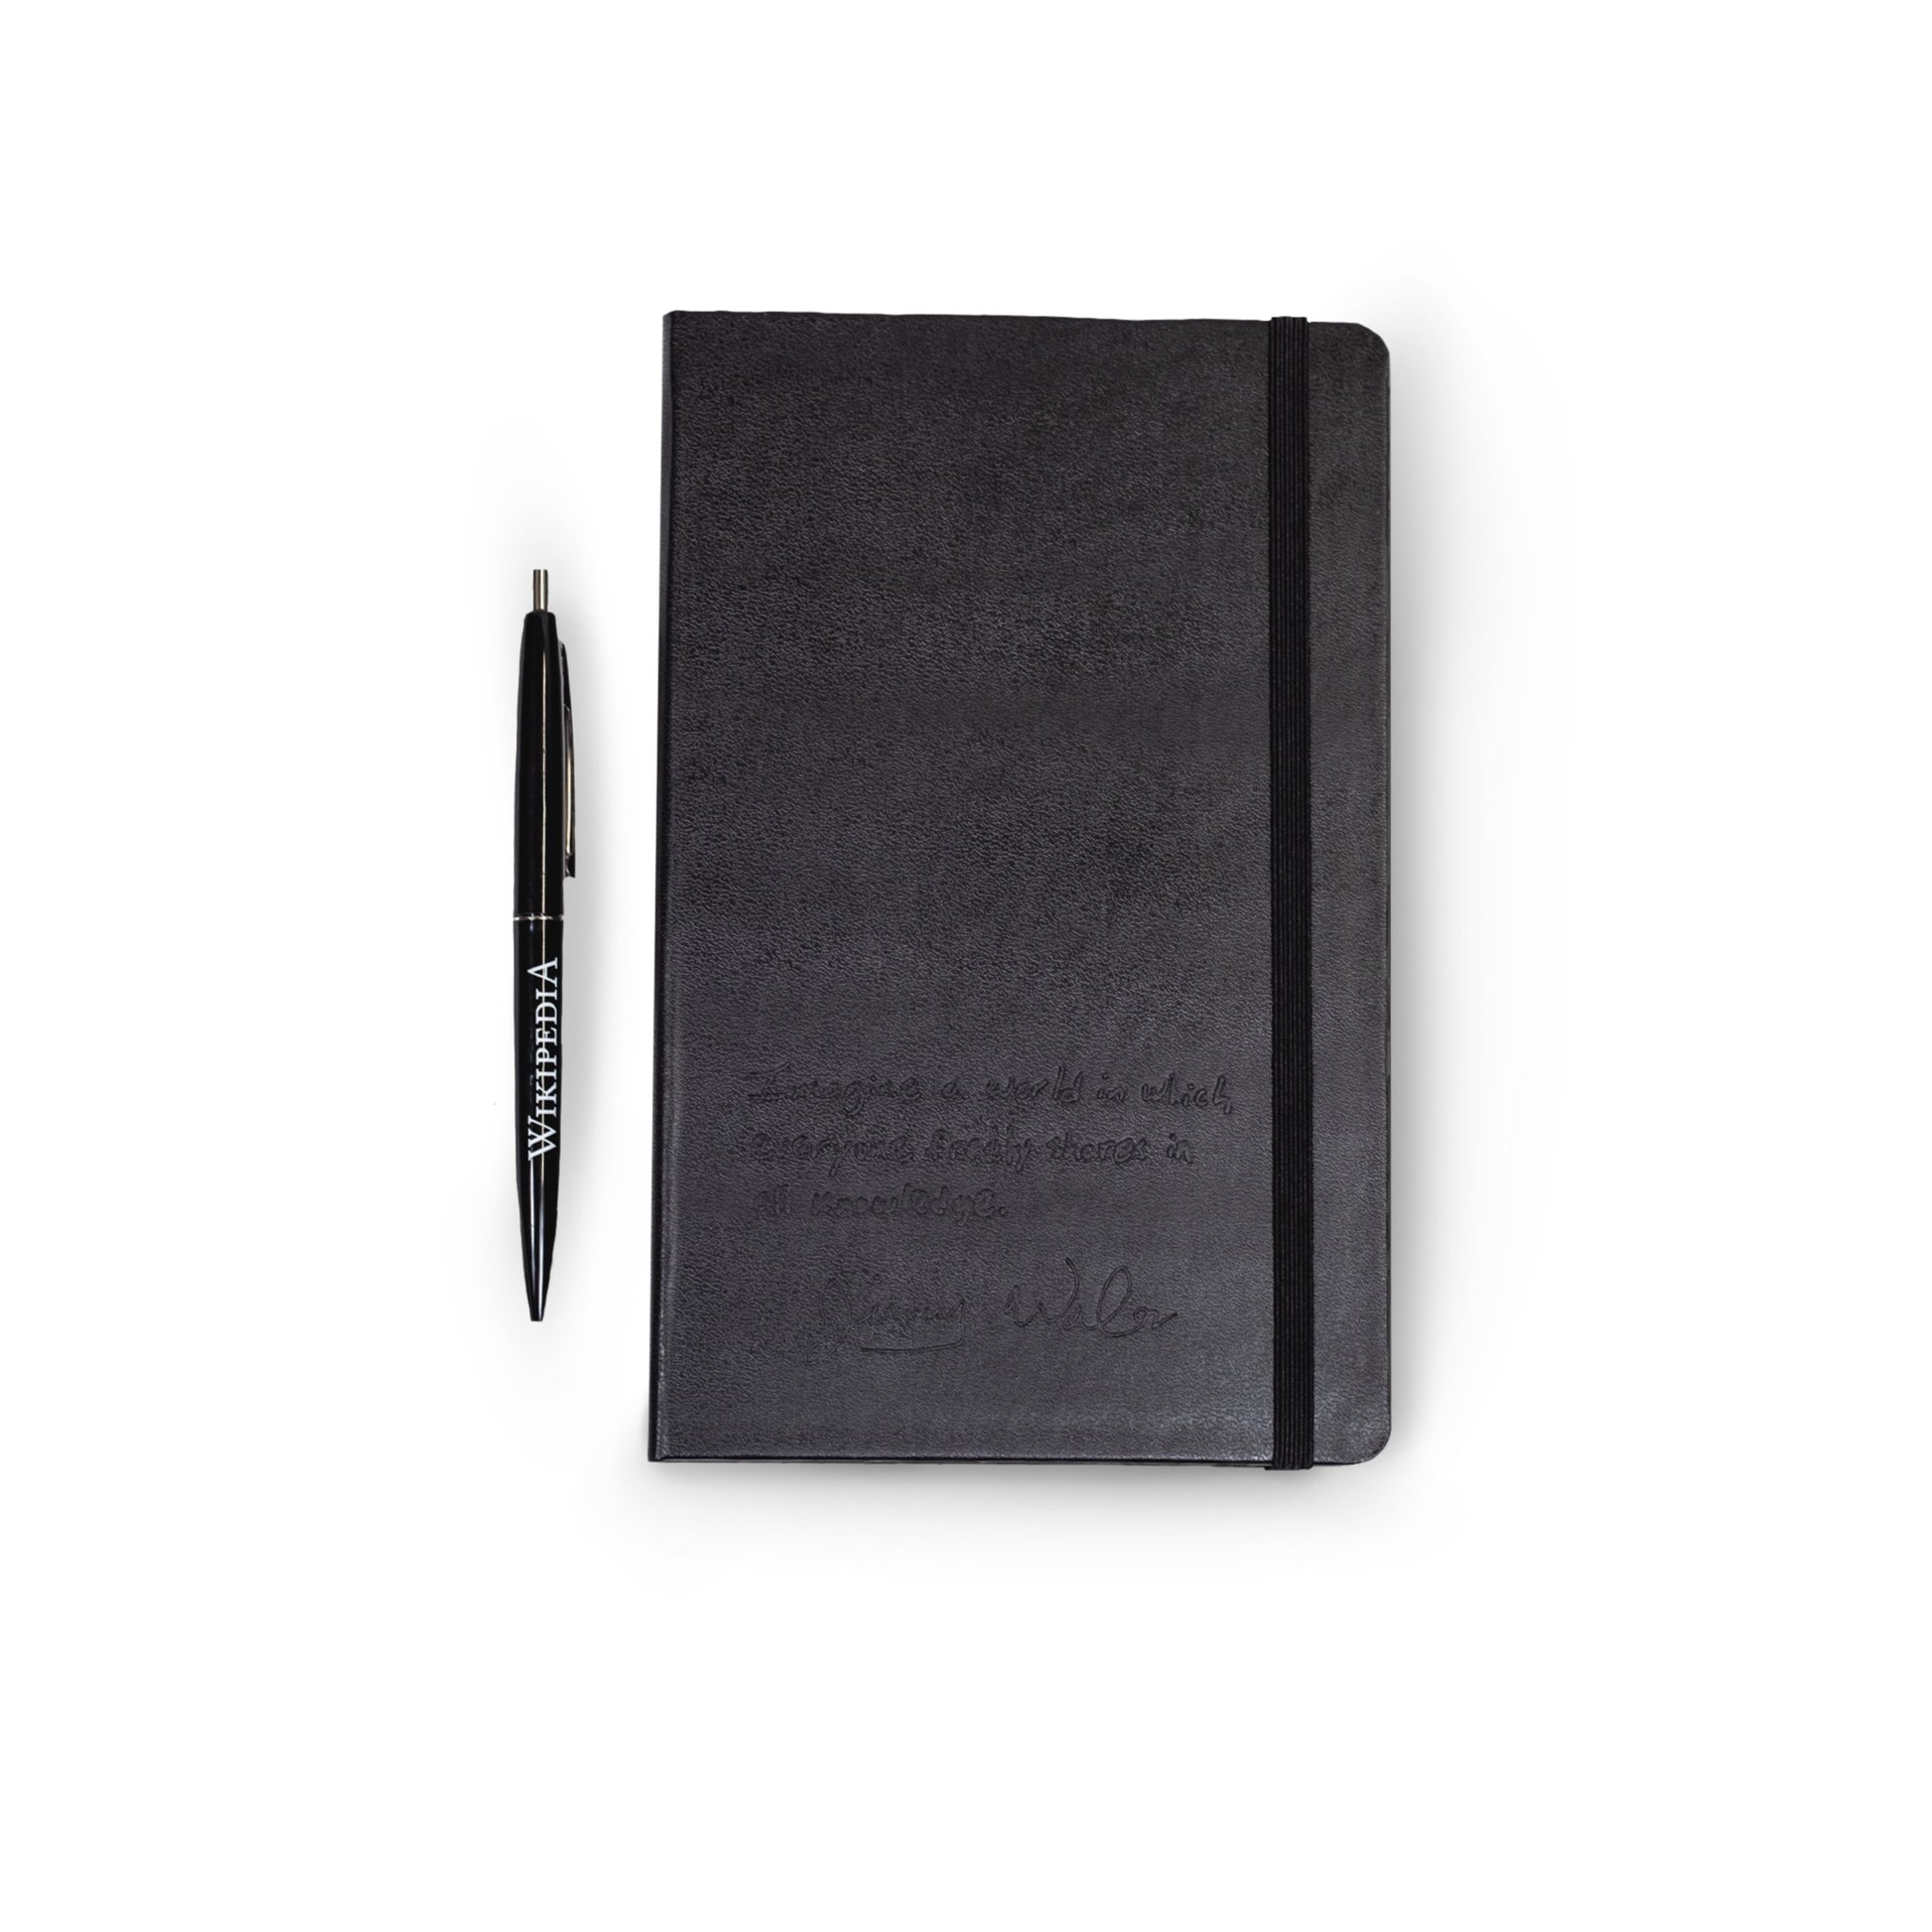 Black Notebook 